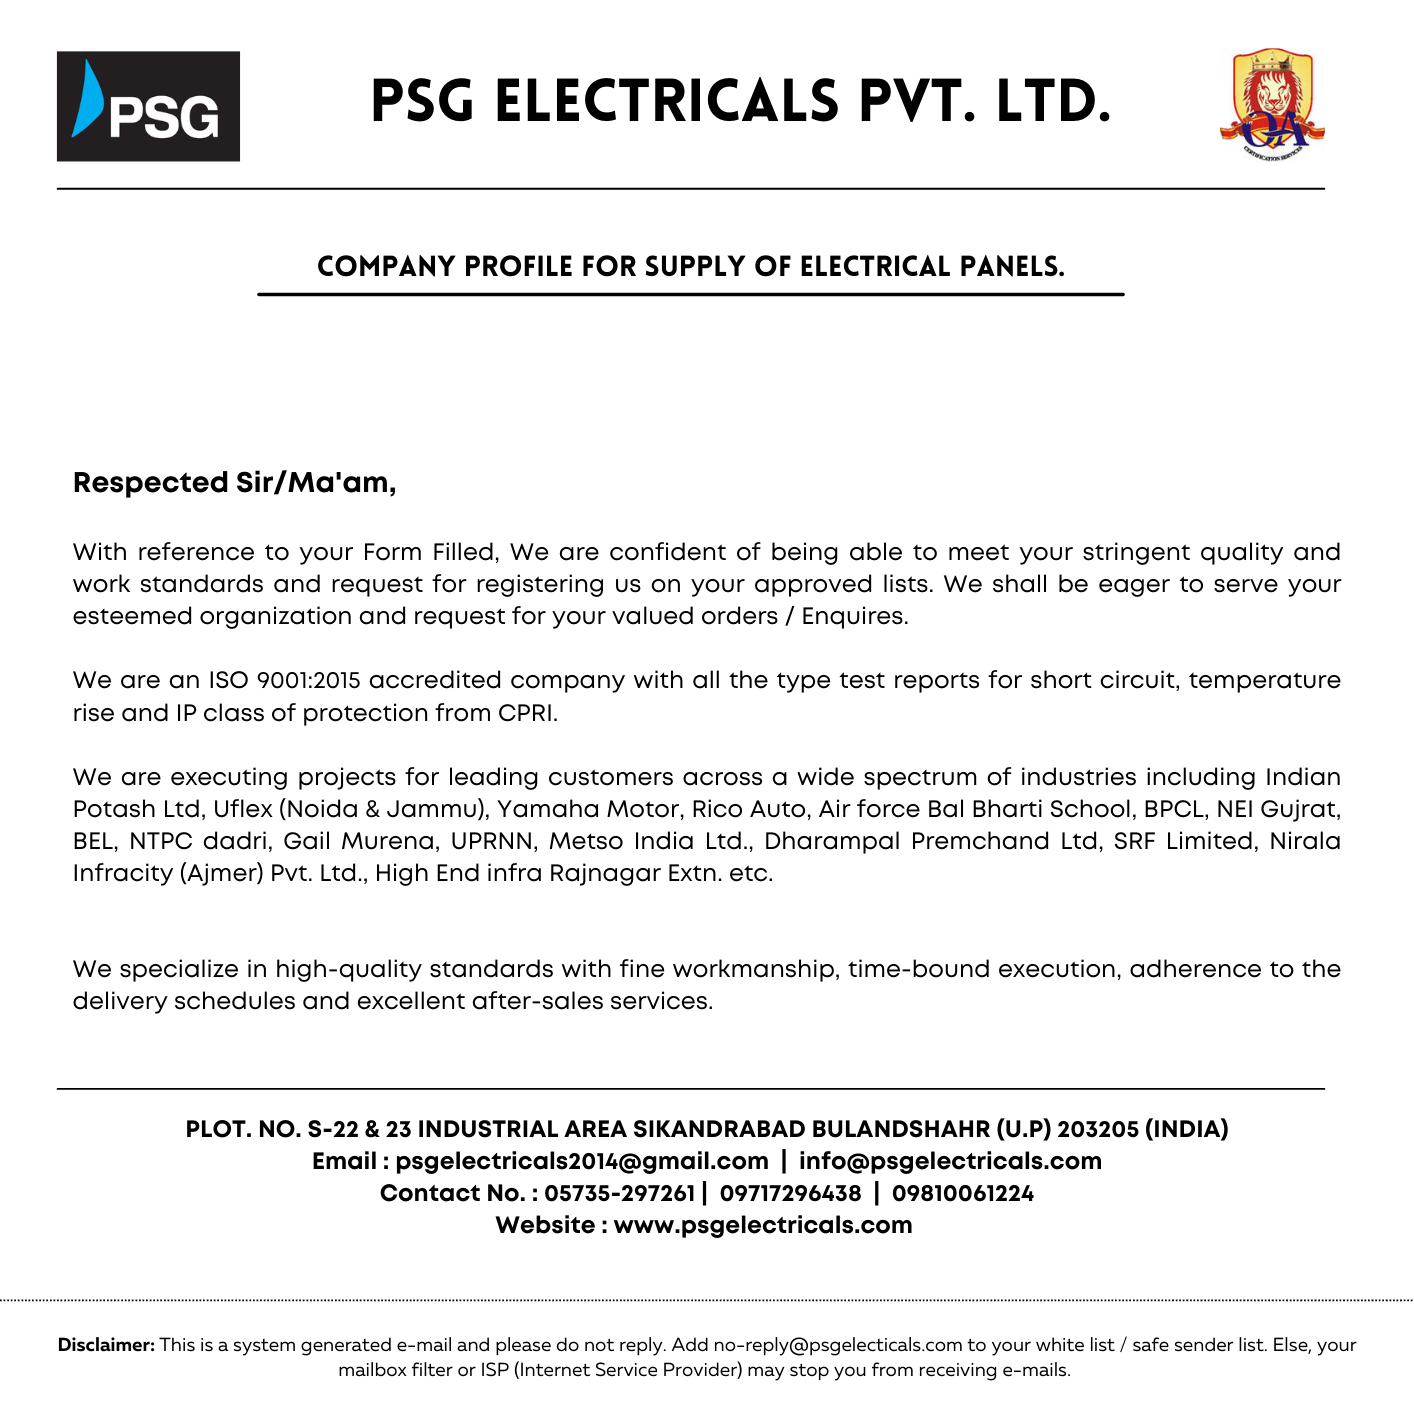 PSG Electricals Pvt. Ltd.